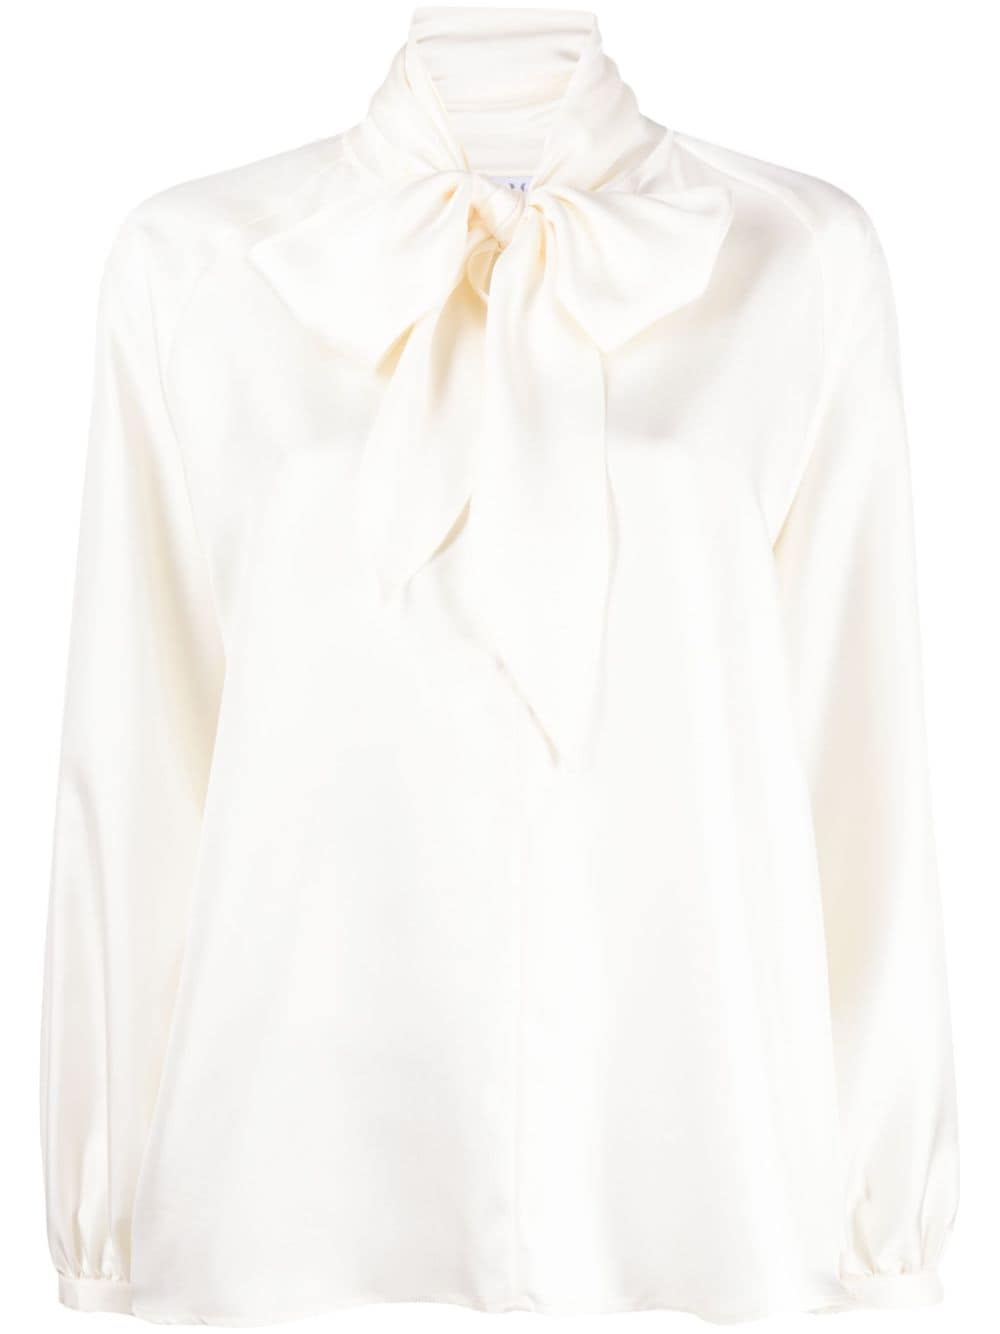 Albenga silk blouse